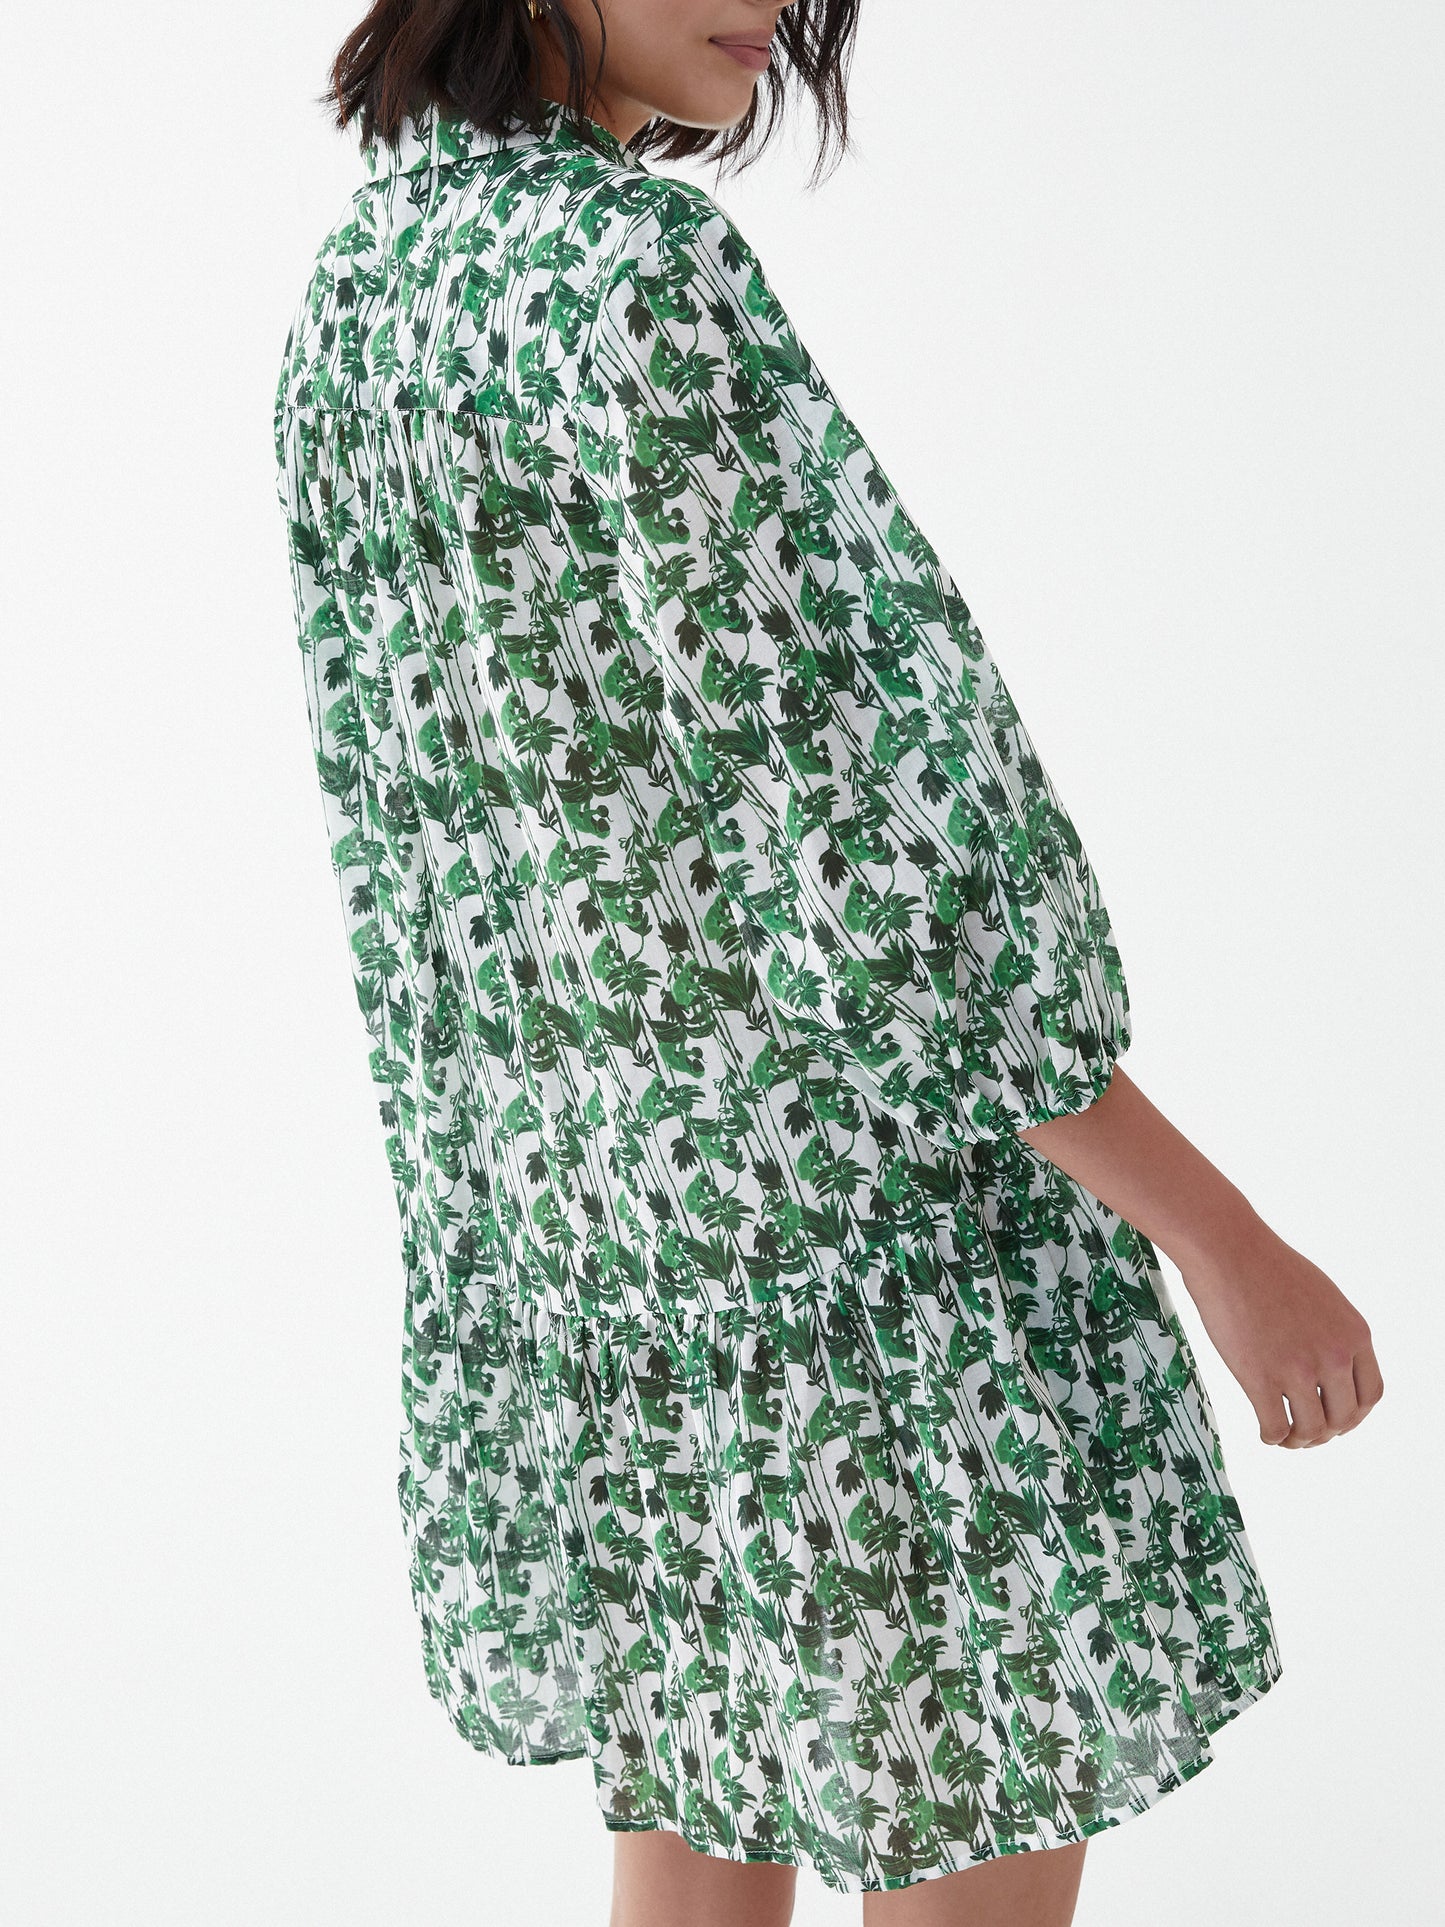 Cloruro Printed Green Dress